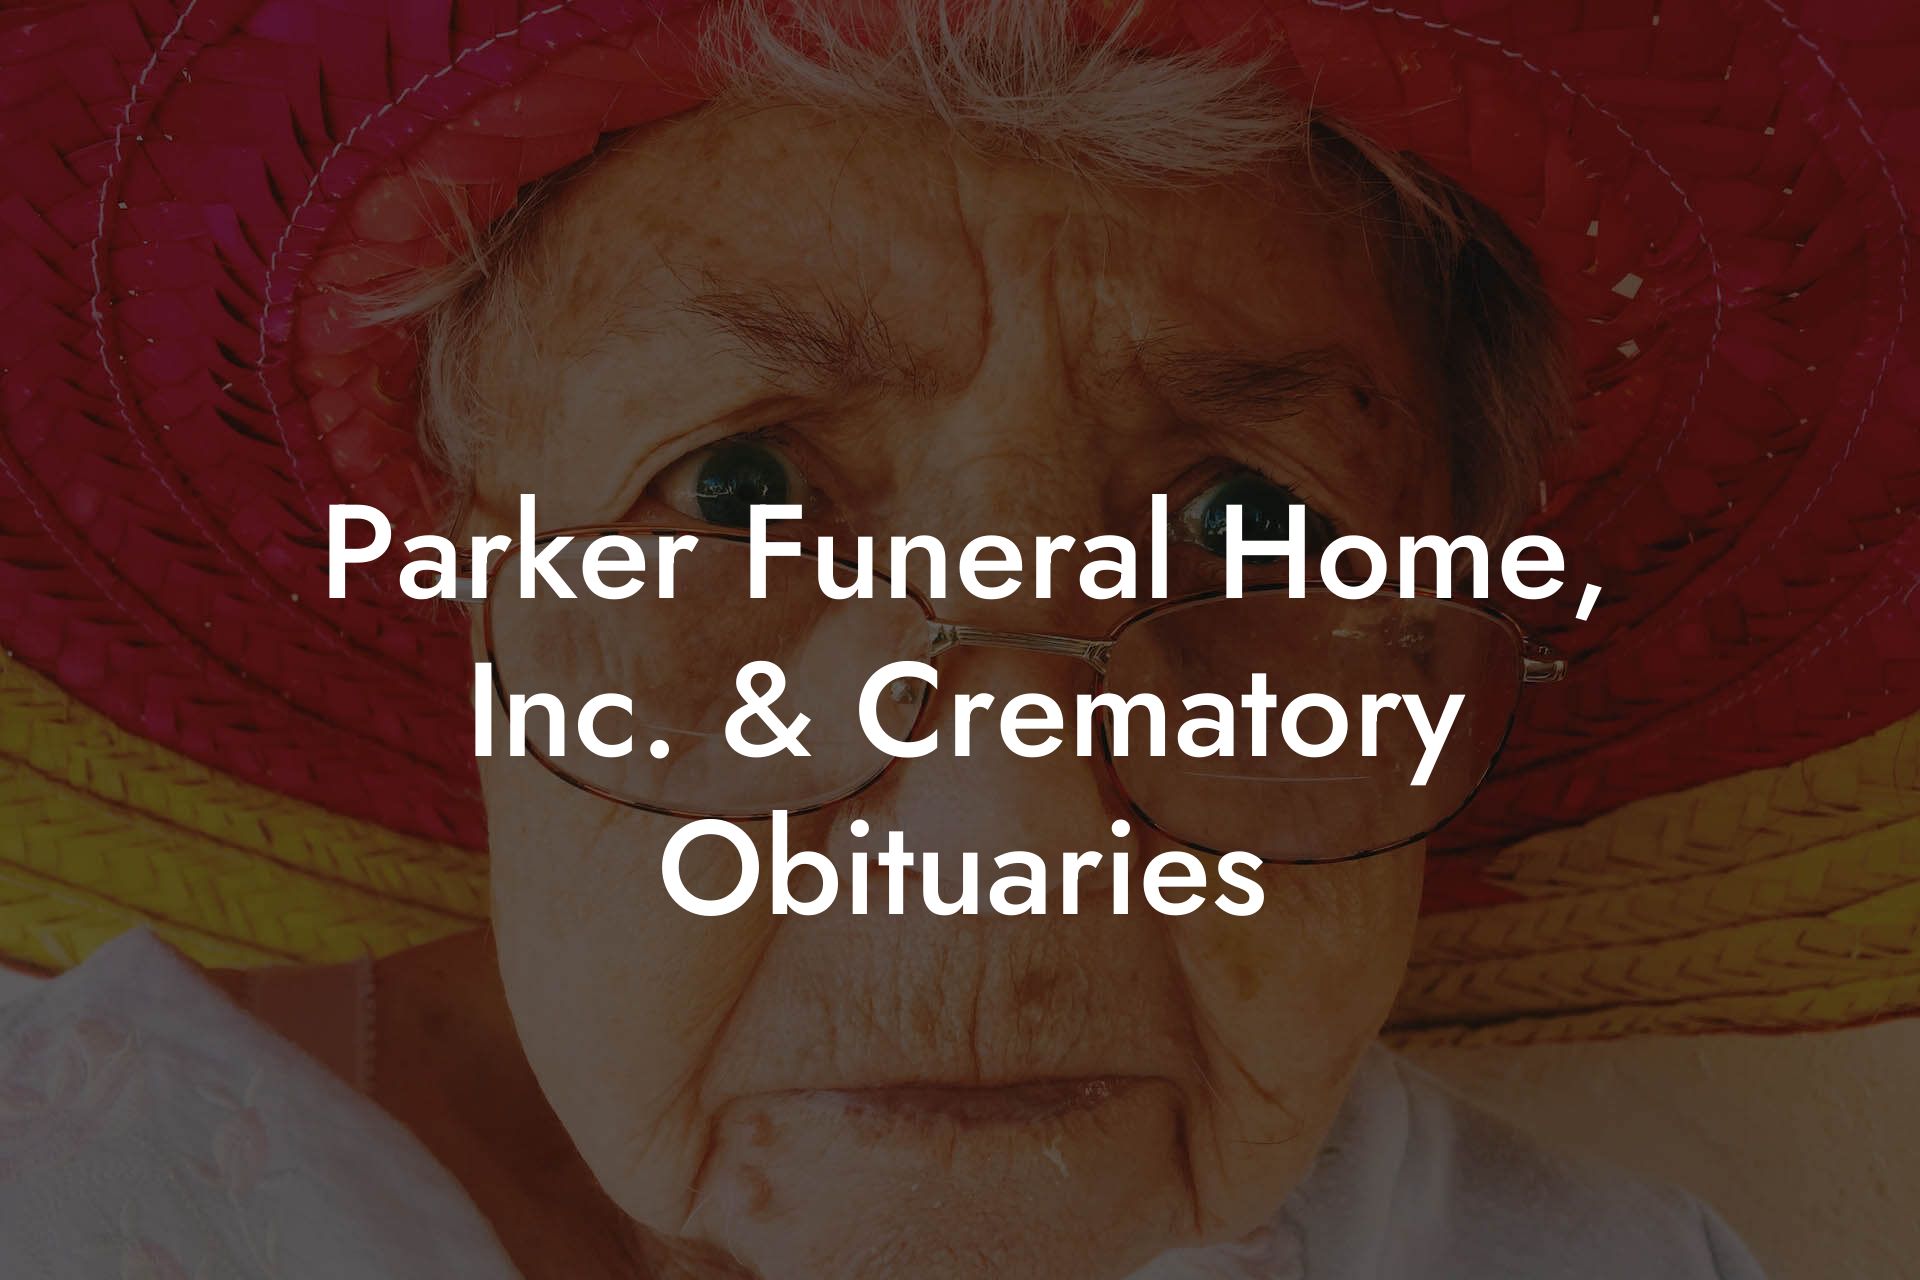 Parker Funeral Home, Inc. & Crematory Obituaries